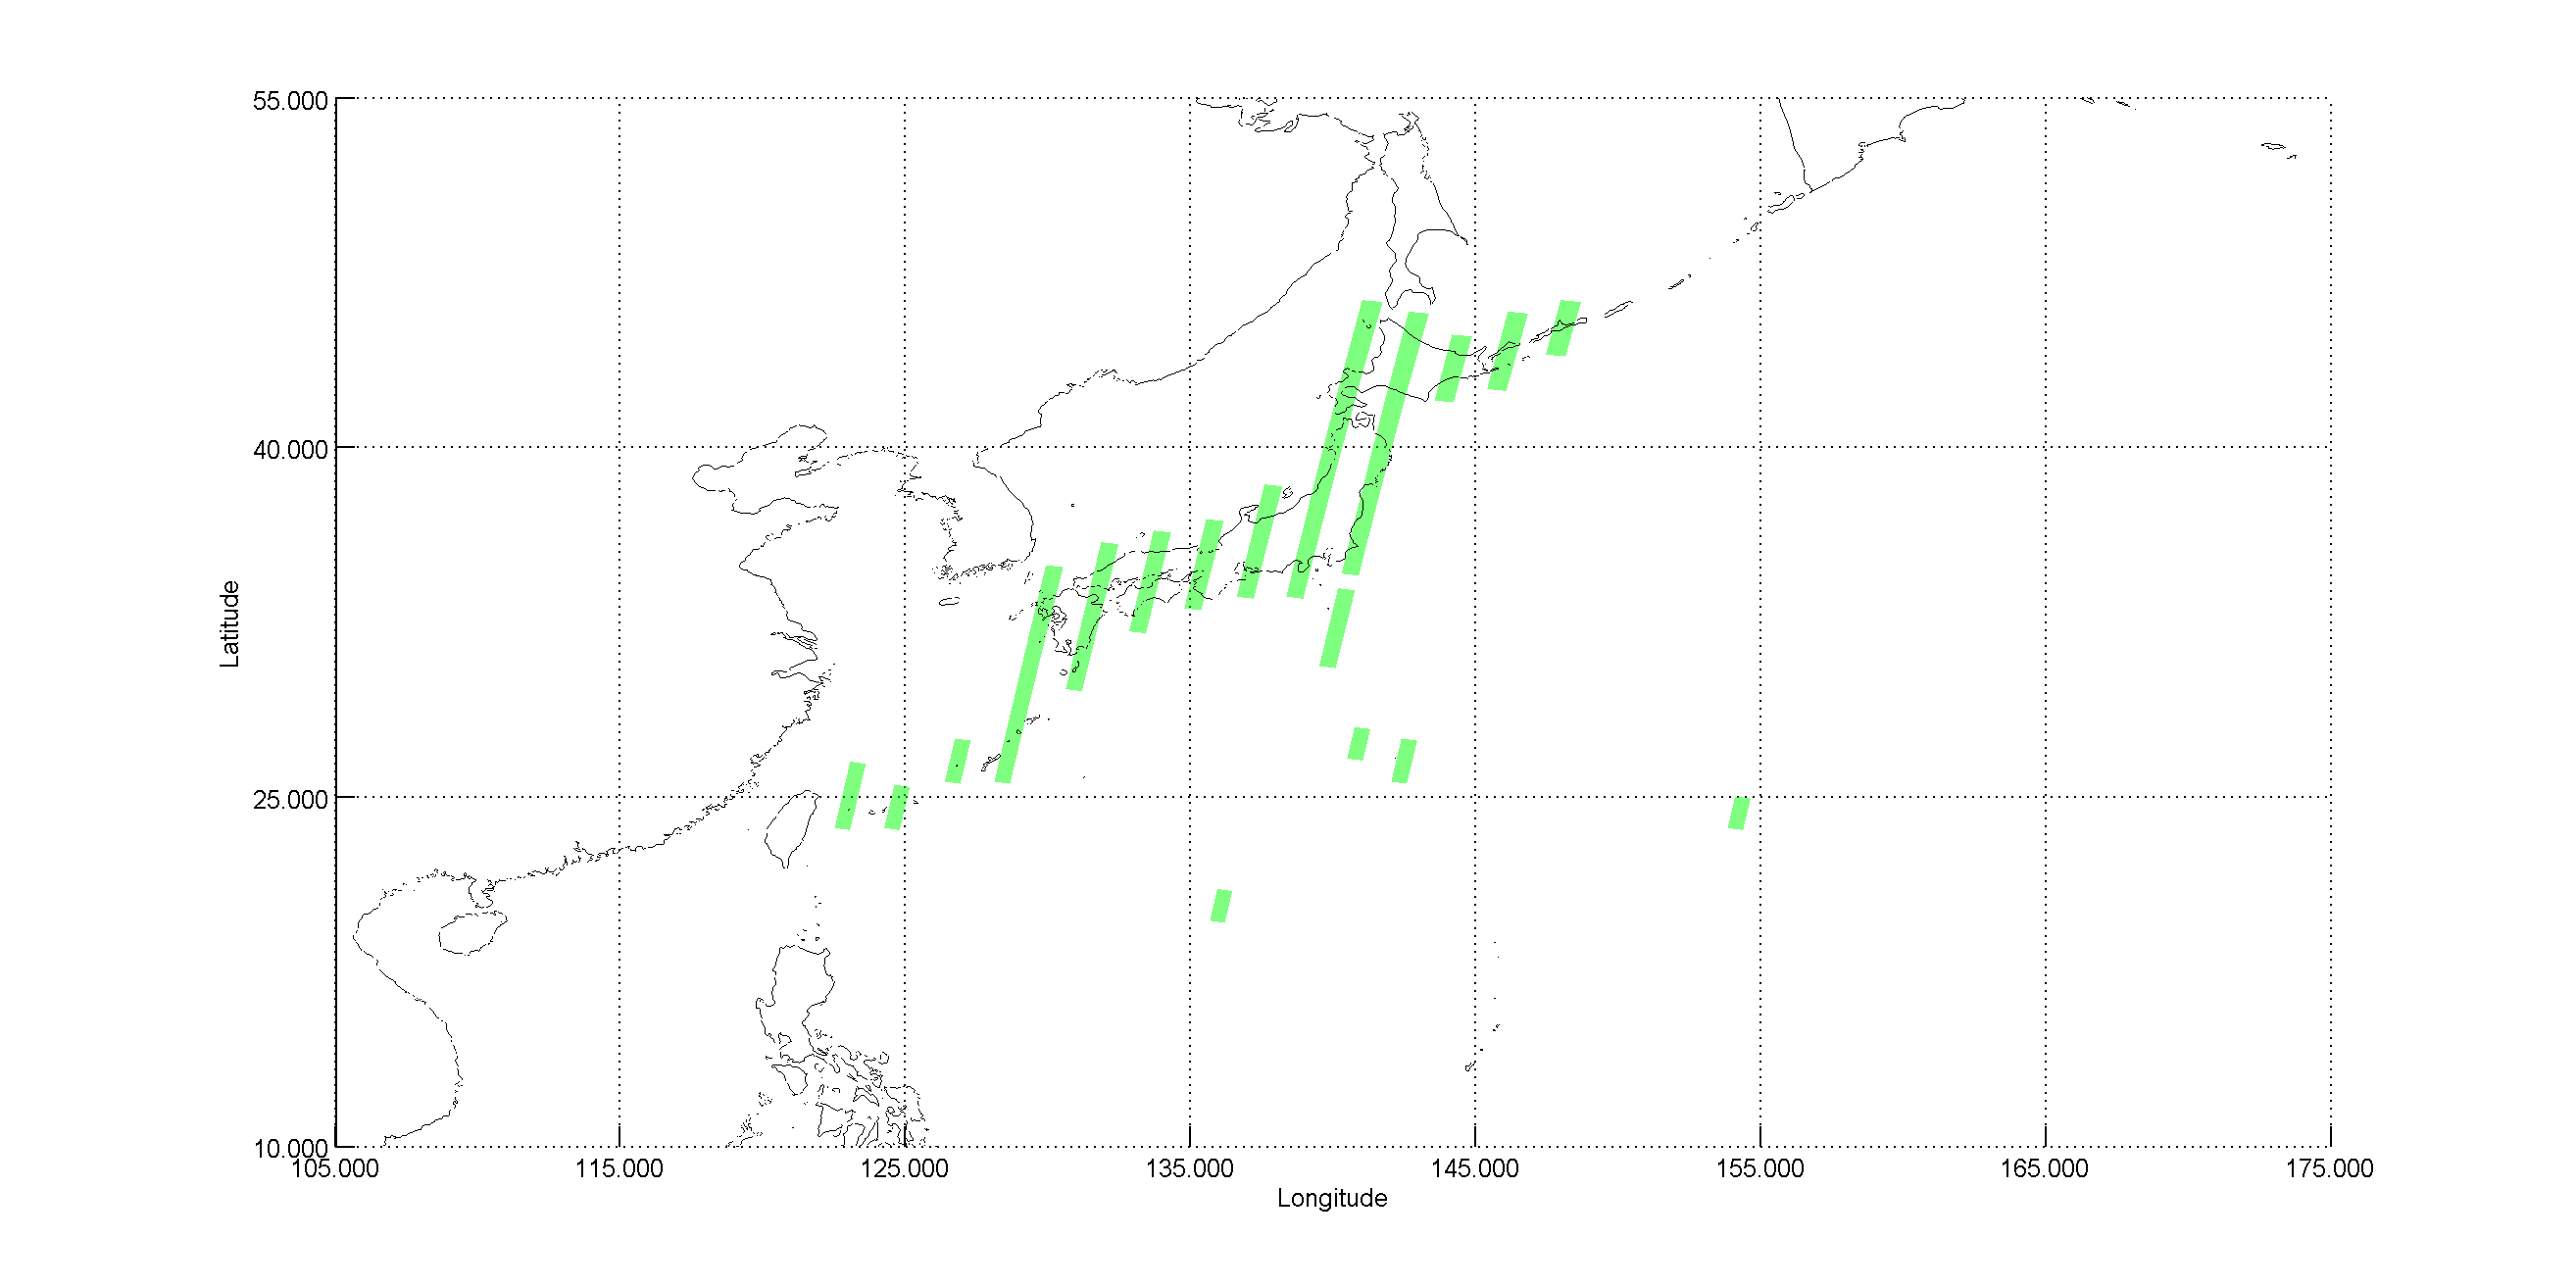 CYCLE_167 - Japan Descending passes